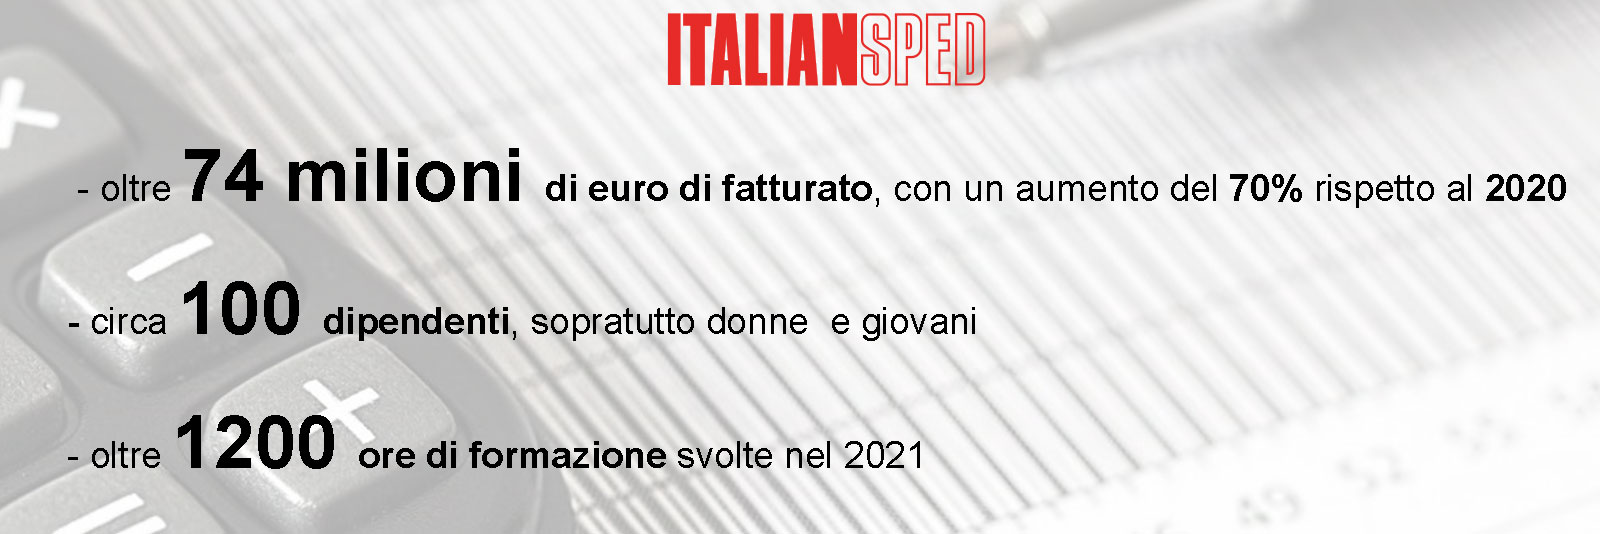 Bilancio Italiansped 2022